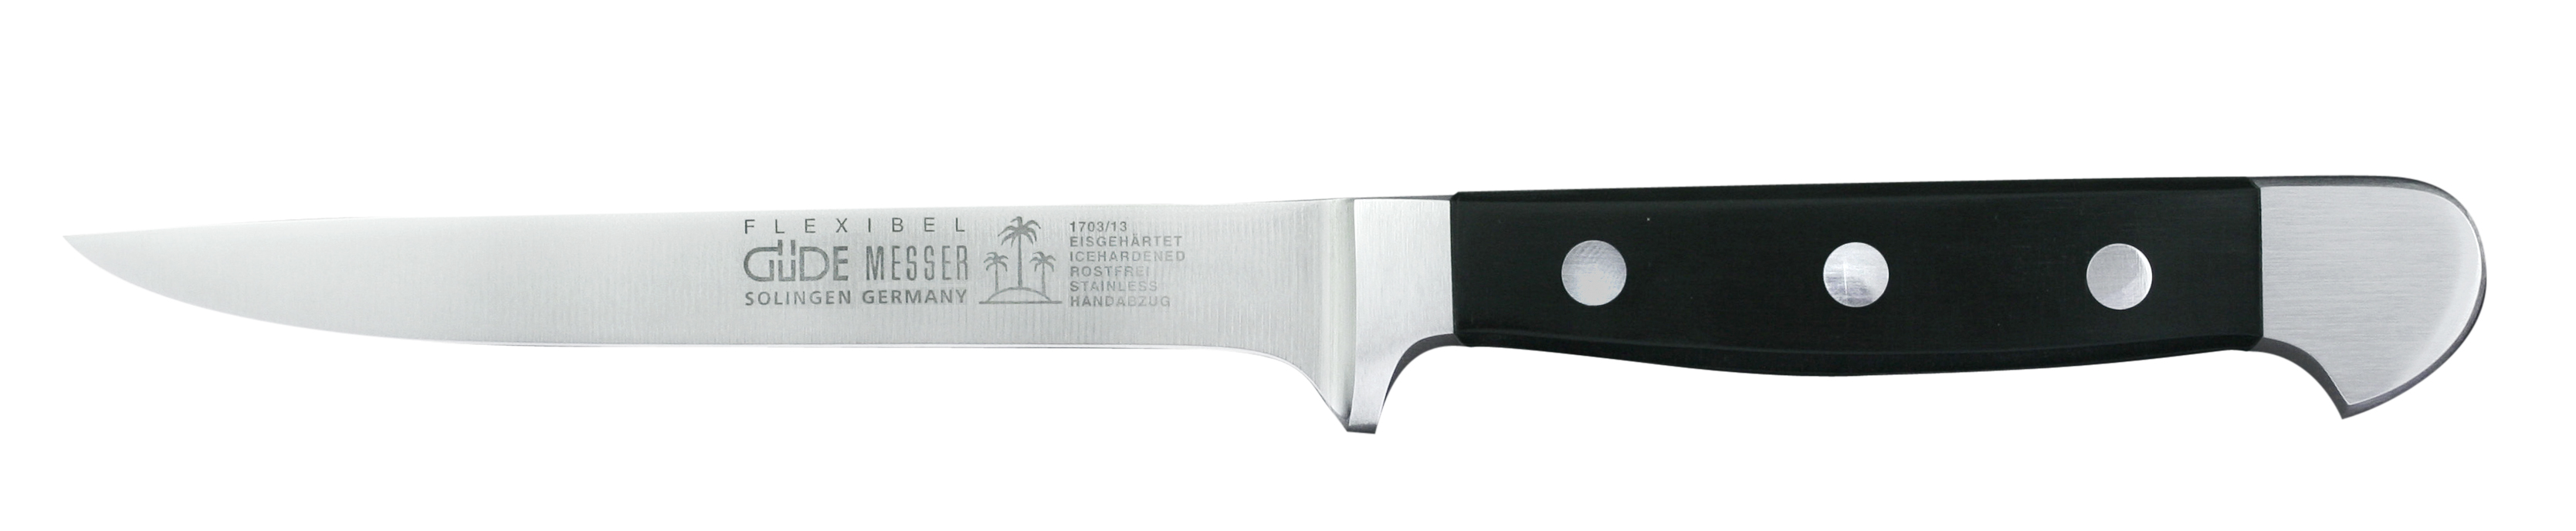 Güde Alpha Ausbeinmesser 13 cm flexibel / CVM-Messerstahl mit Griffschalen aus Hostaform